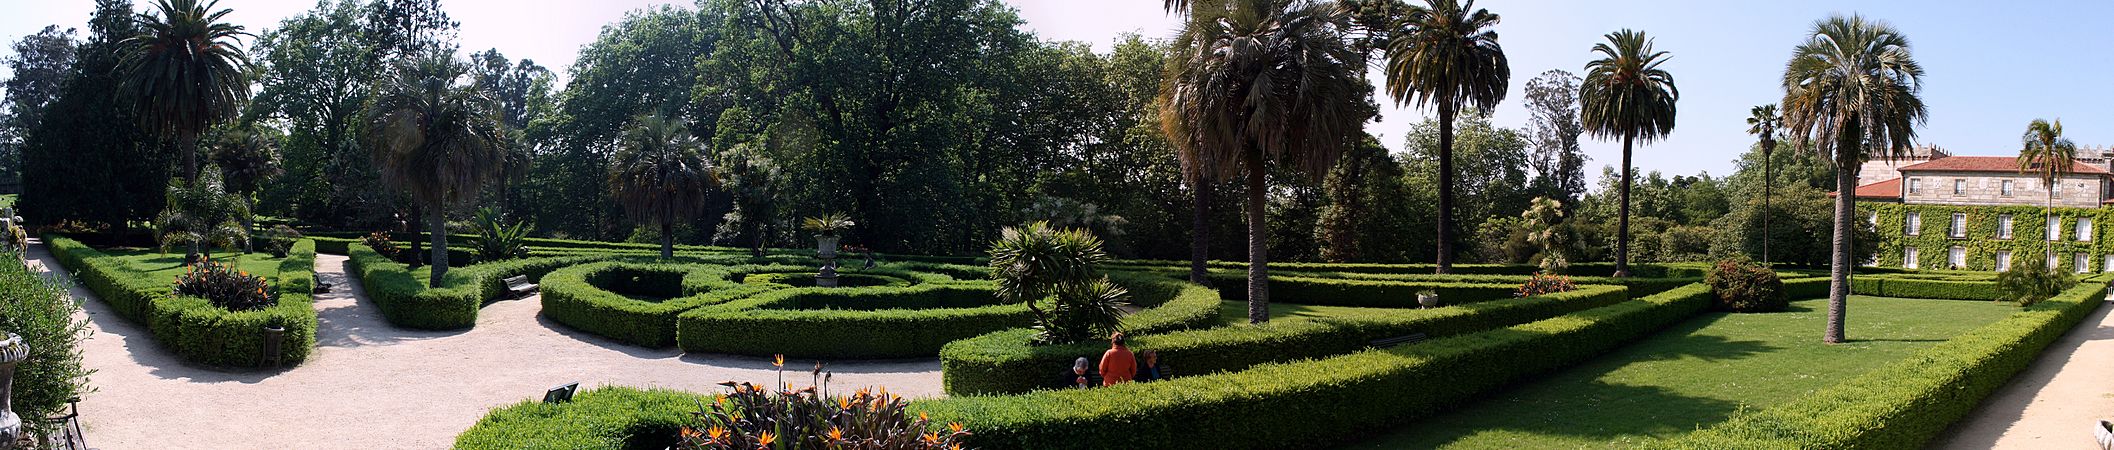 Castrelos Jardín Francés - panoramio